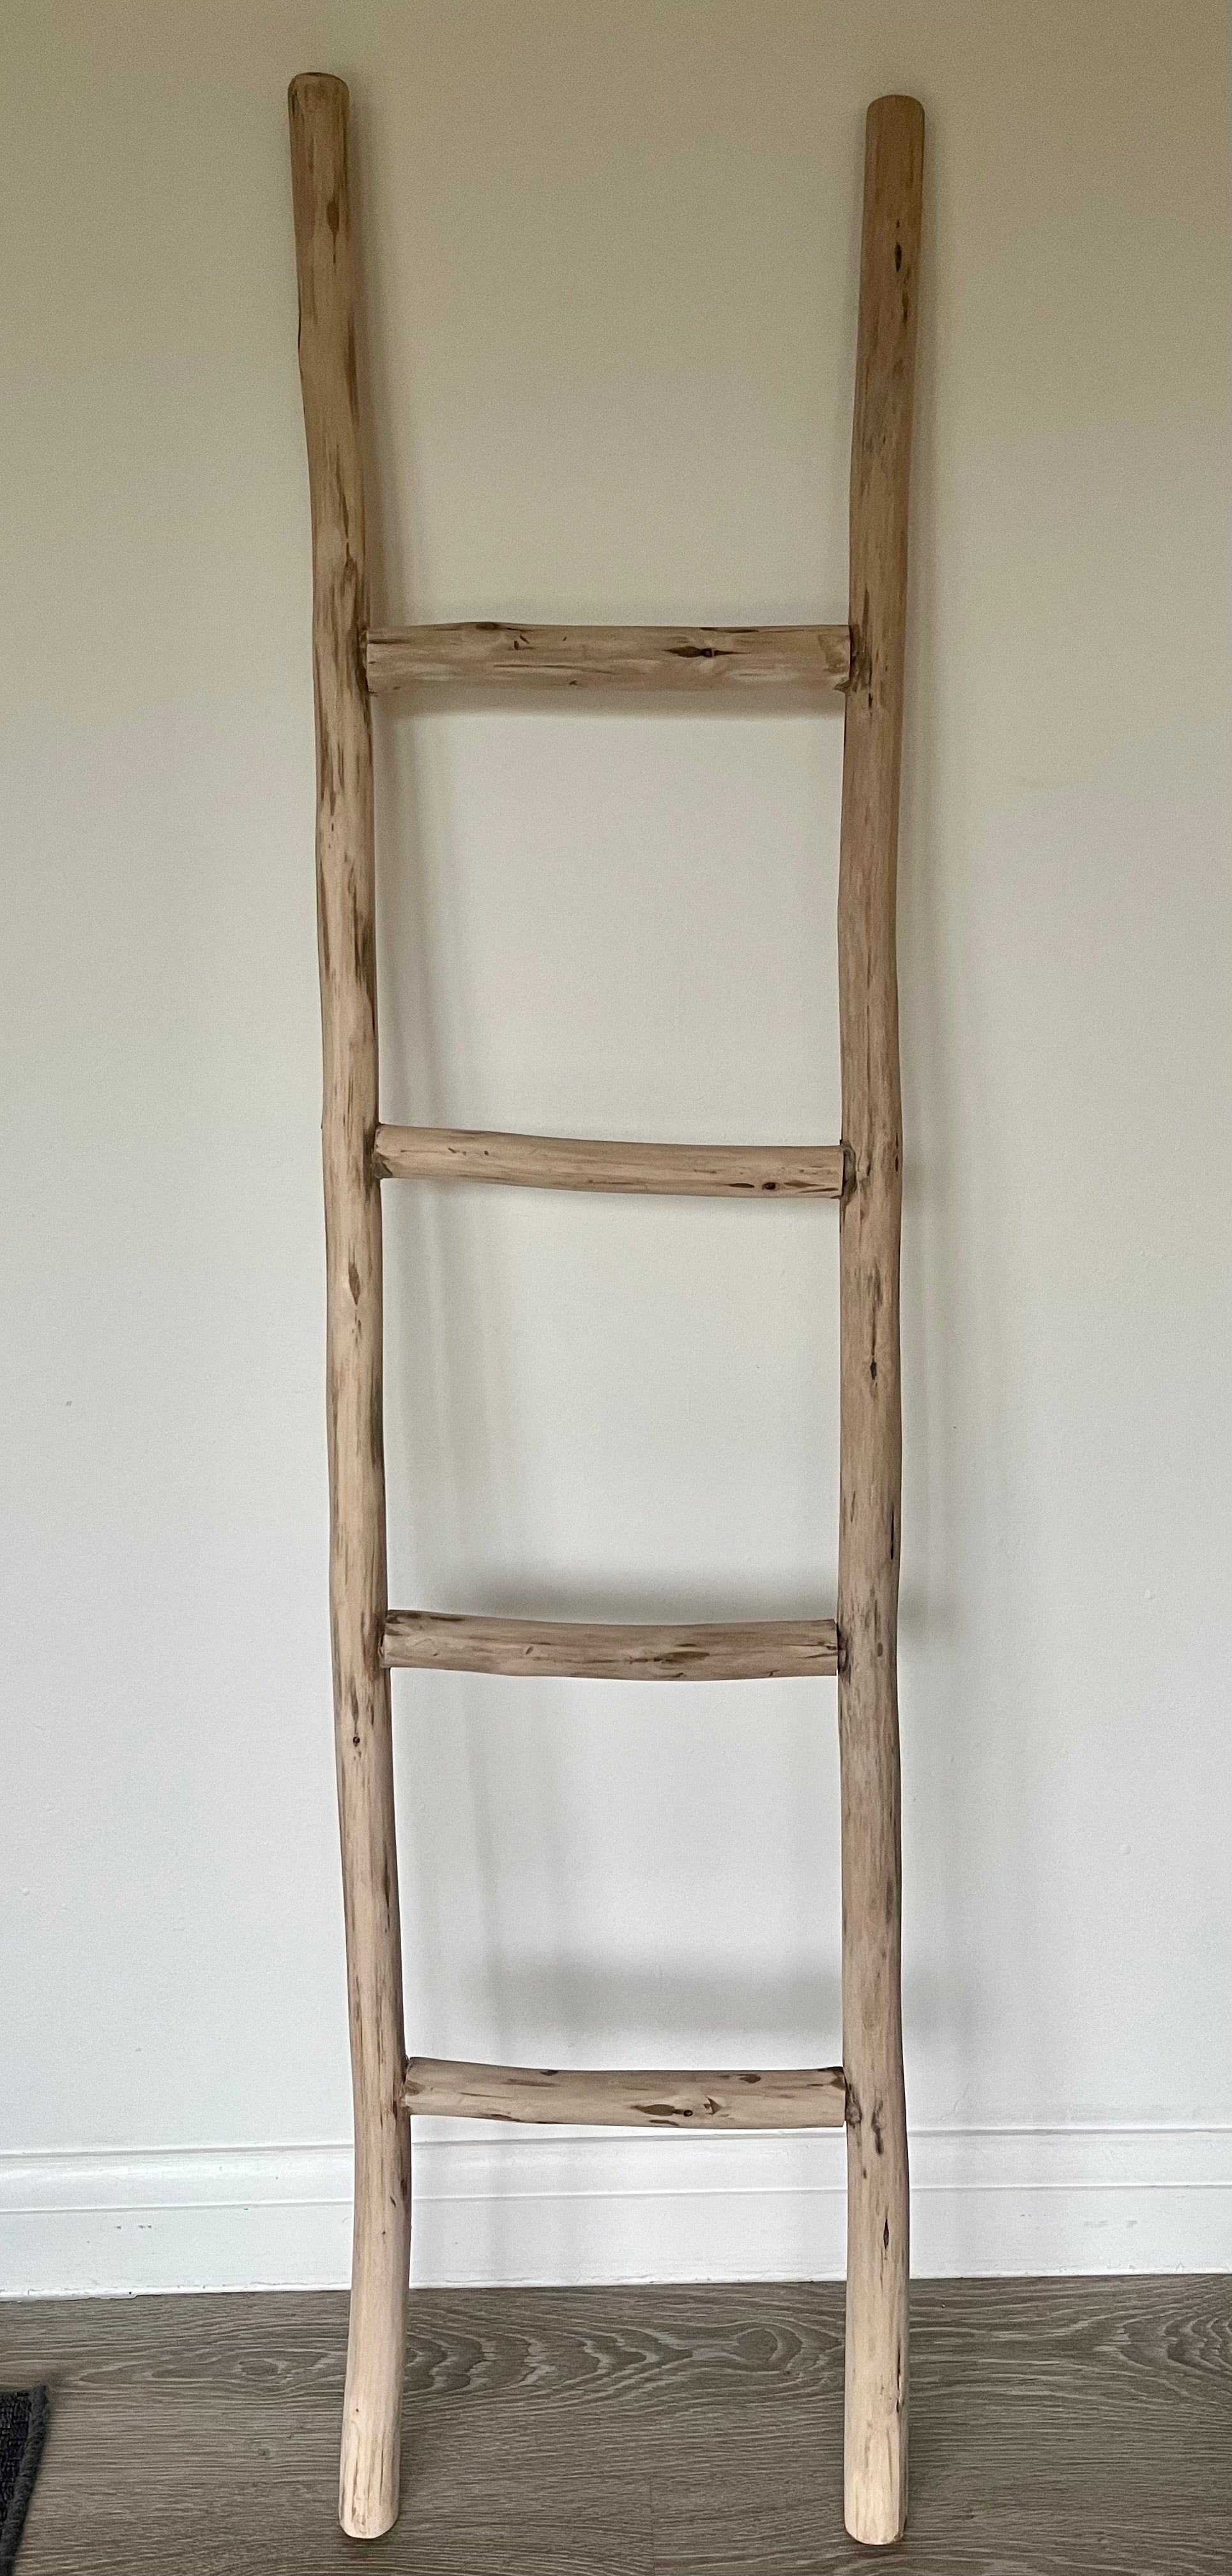 House ladder